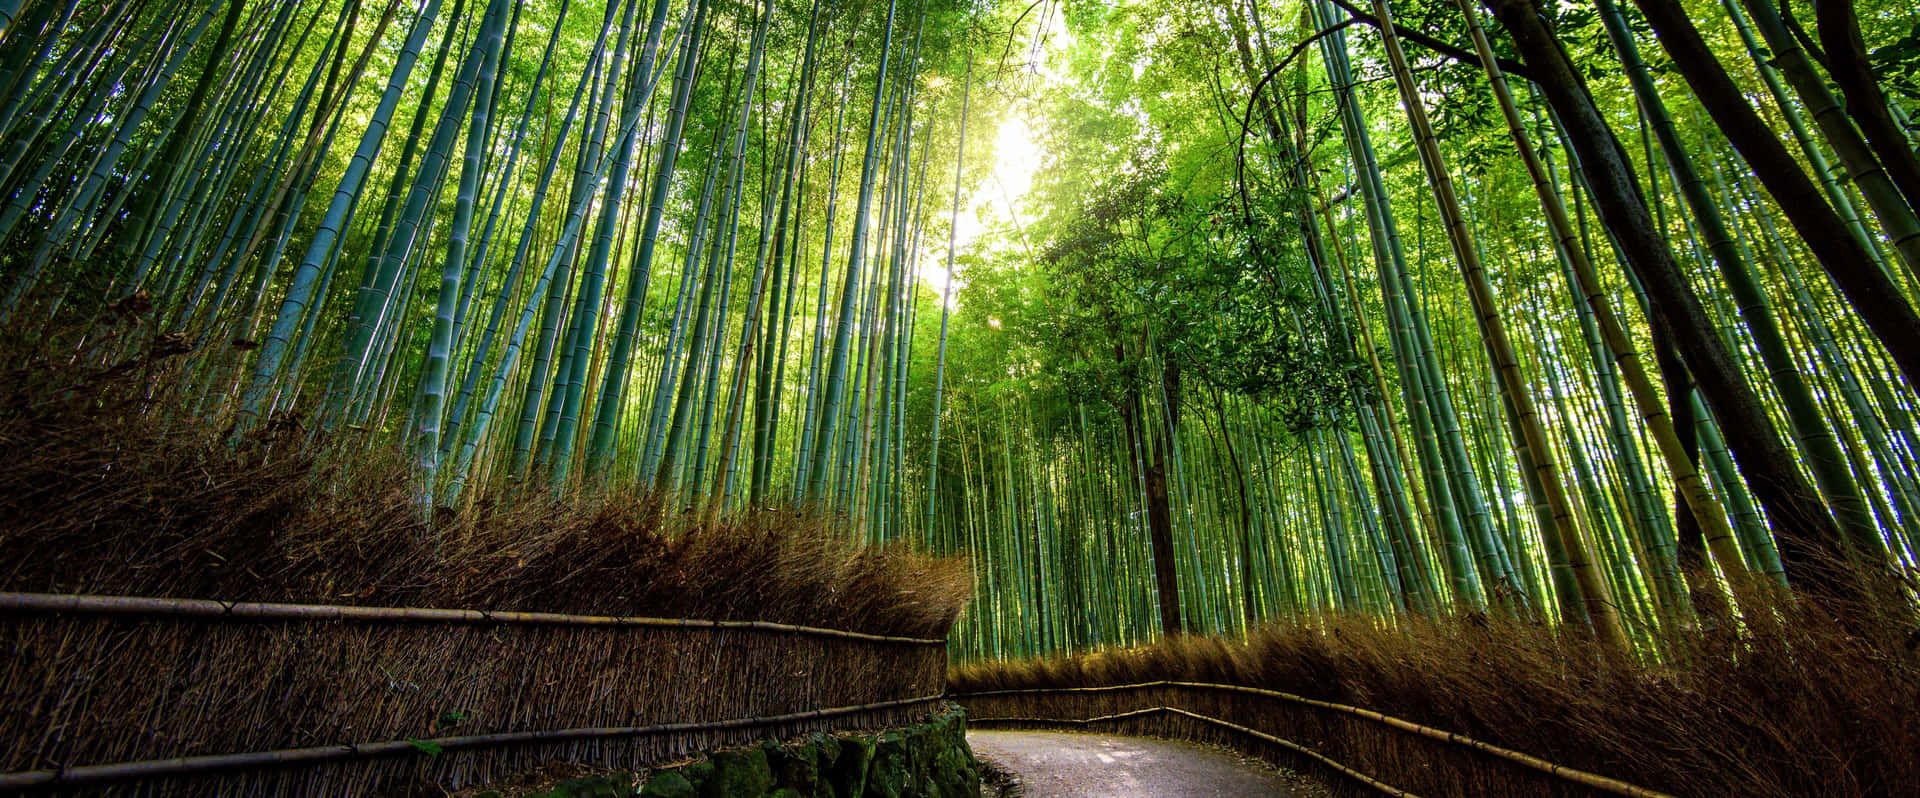 Serenaforesta Di Bambù